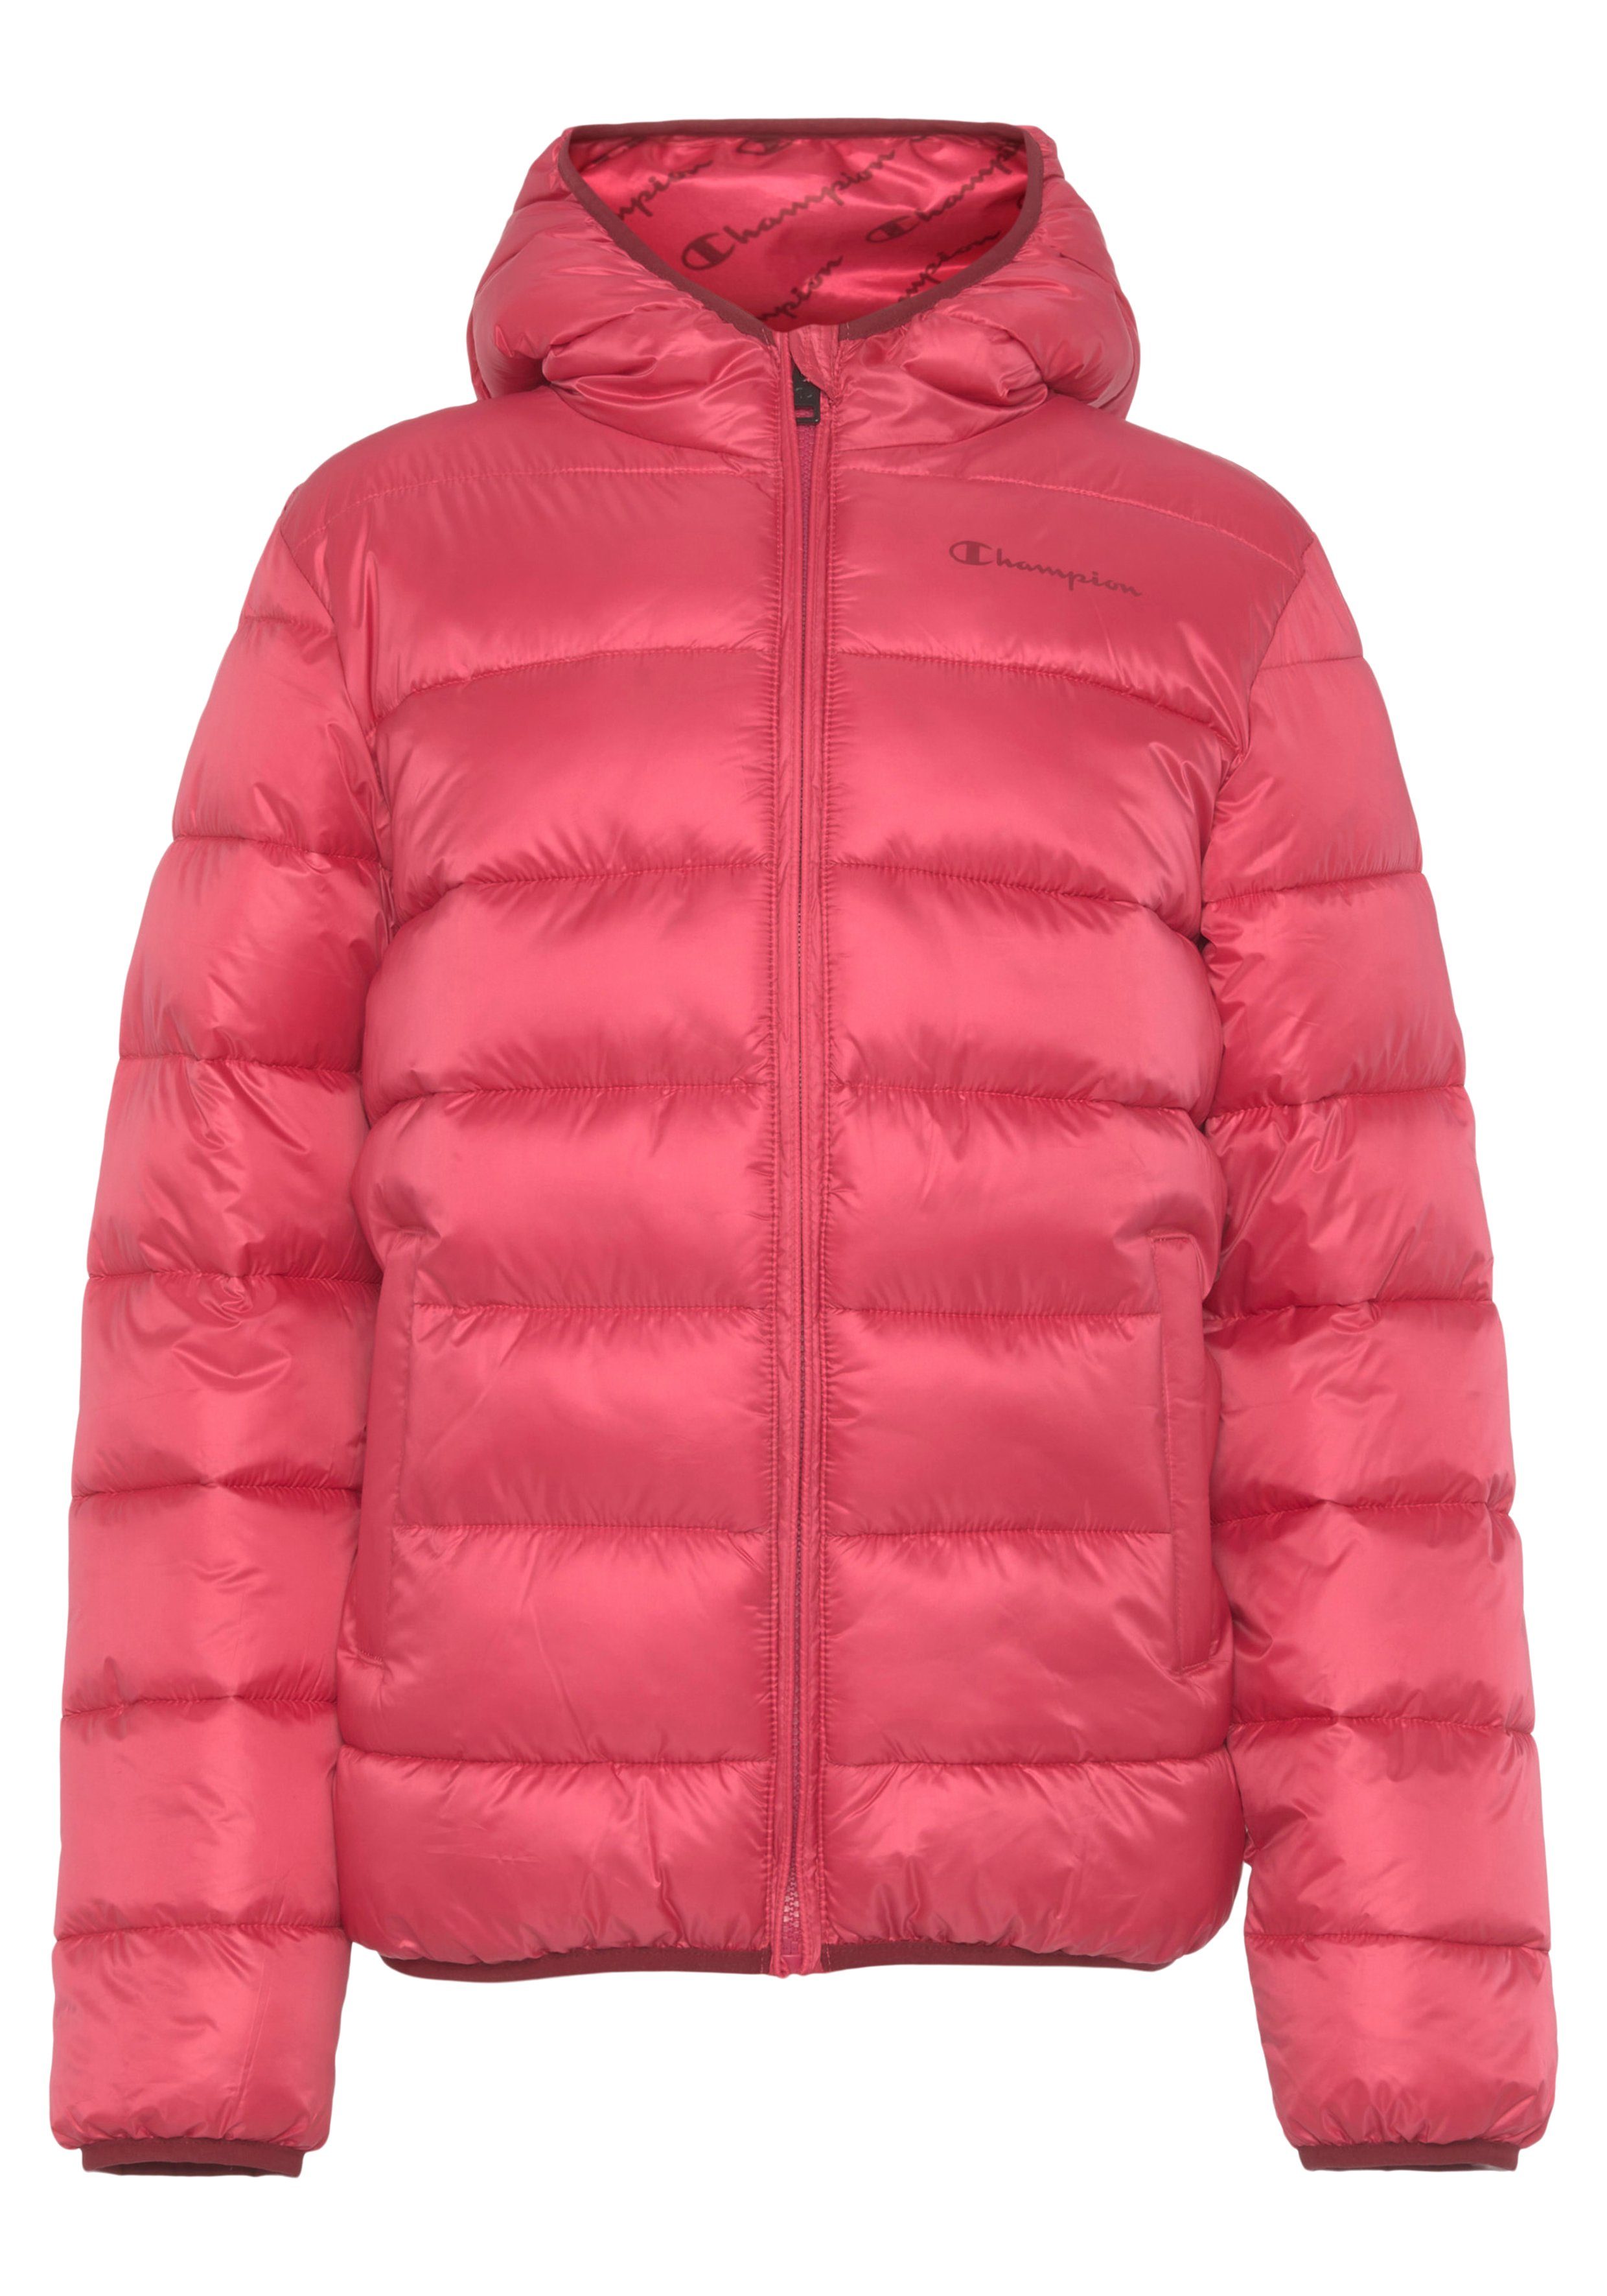 Champion Hooded Jacket Kinder - Steppjacke Outdoor für pink